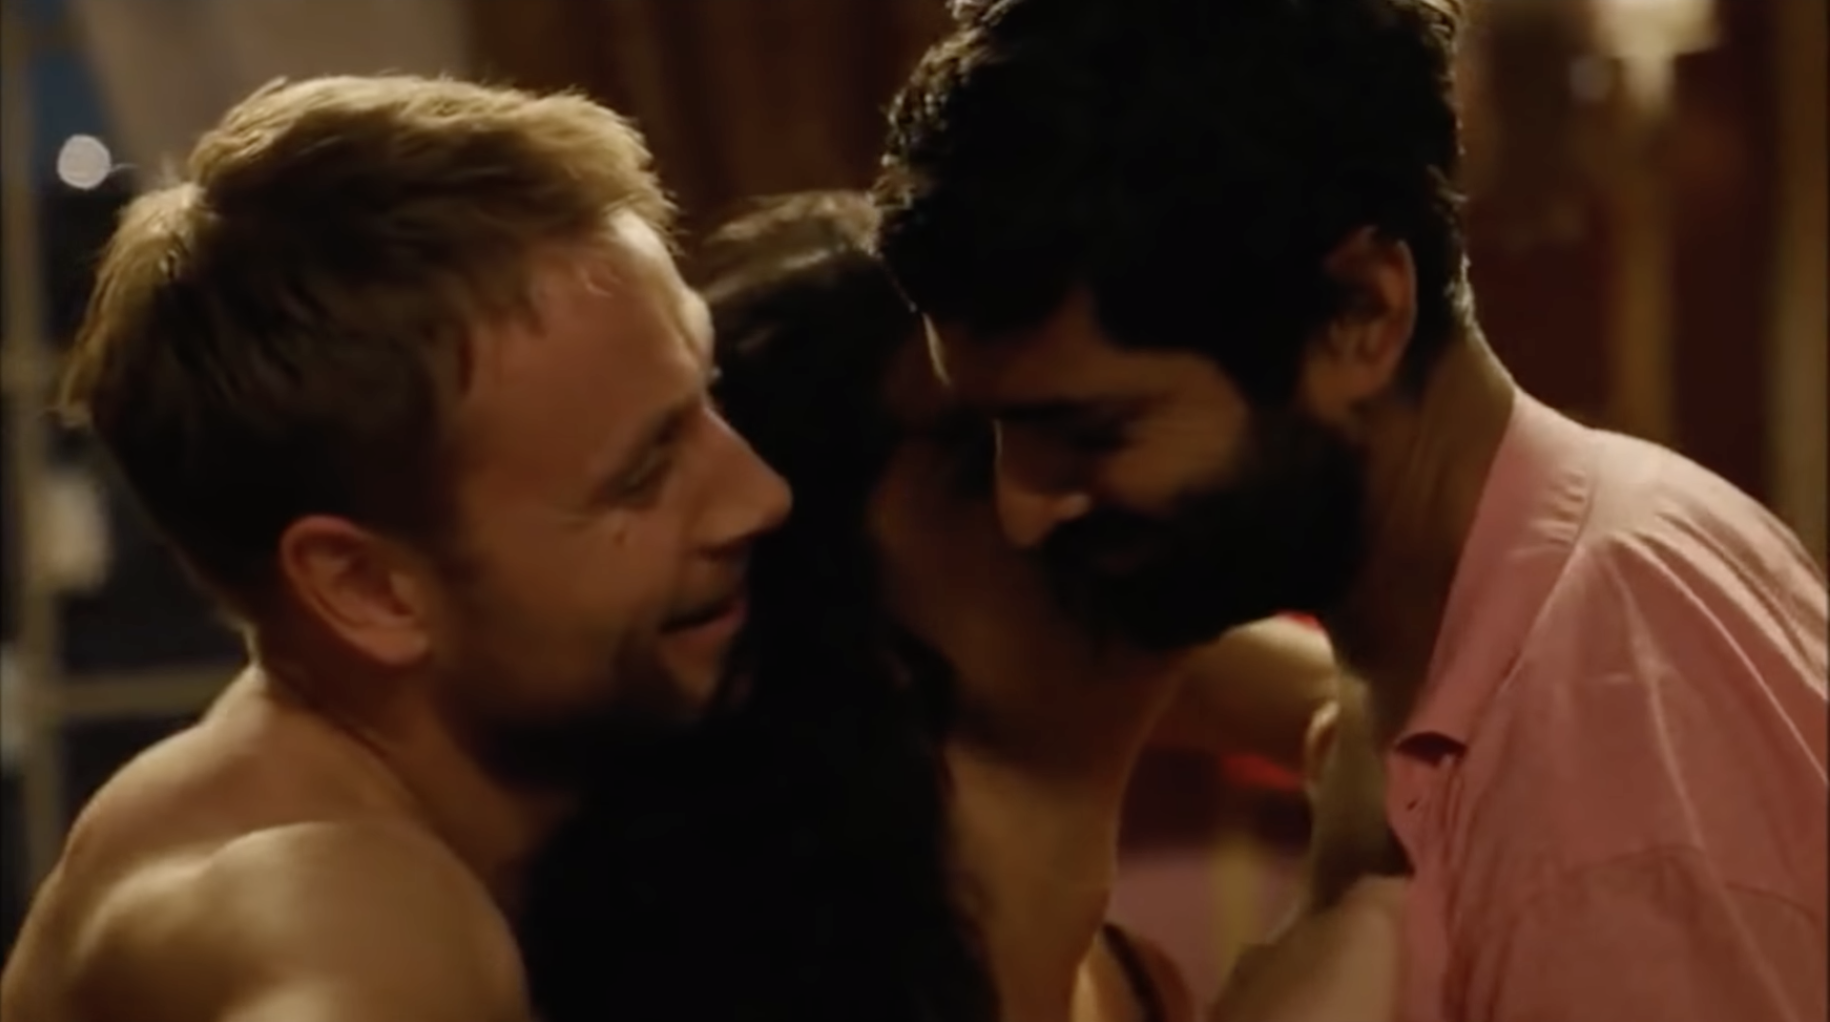 Sex Parti Kala Land - Porn Movies on Netflix: Hottest Sex Scenes and Nudity on Netflix